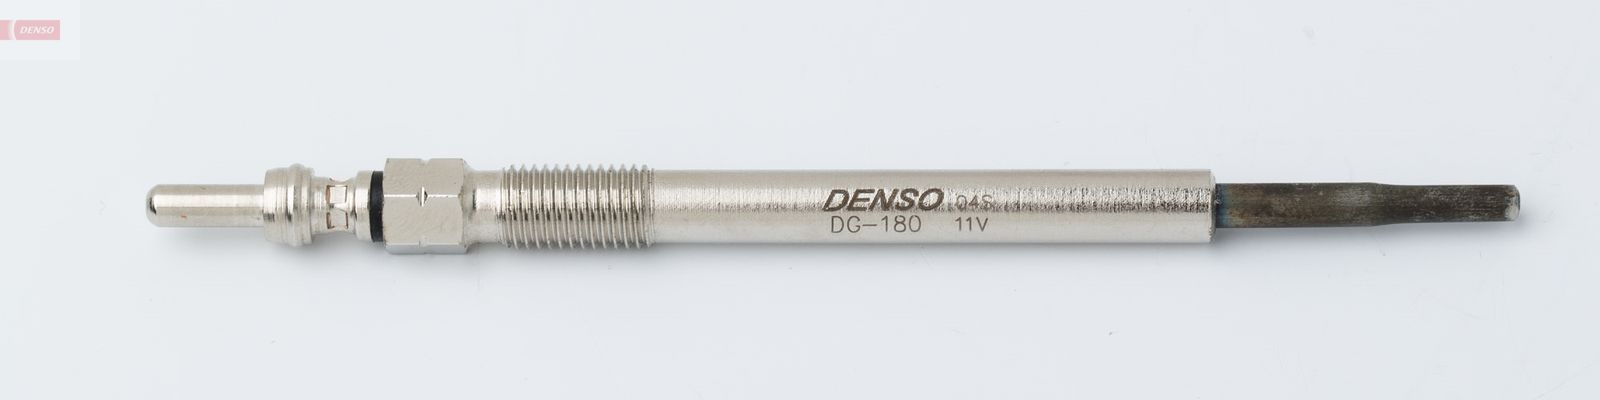 żeraviaca sviečka DENSO DG-180